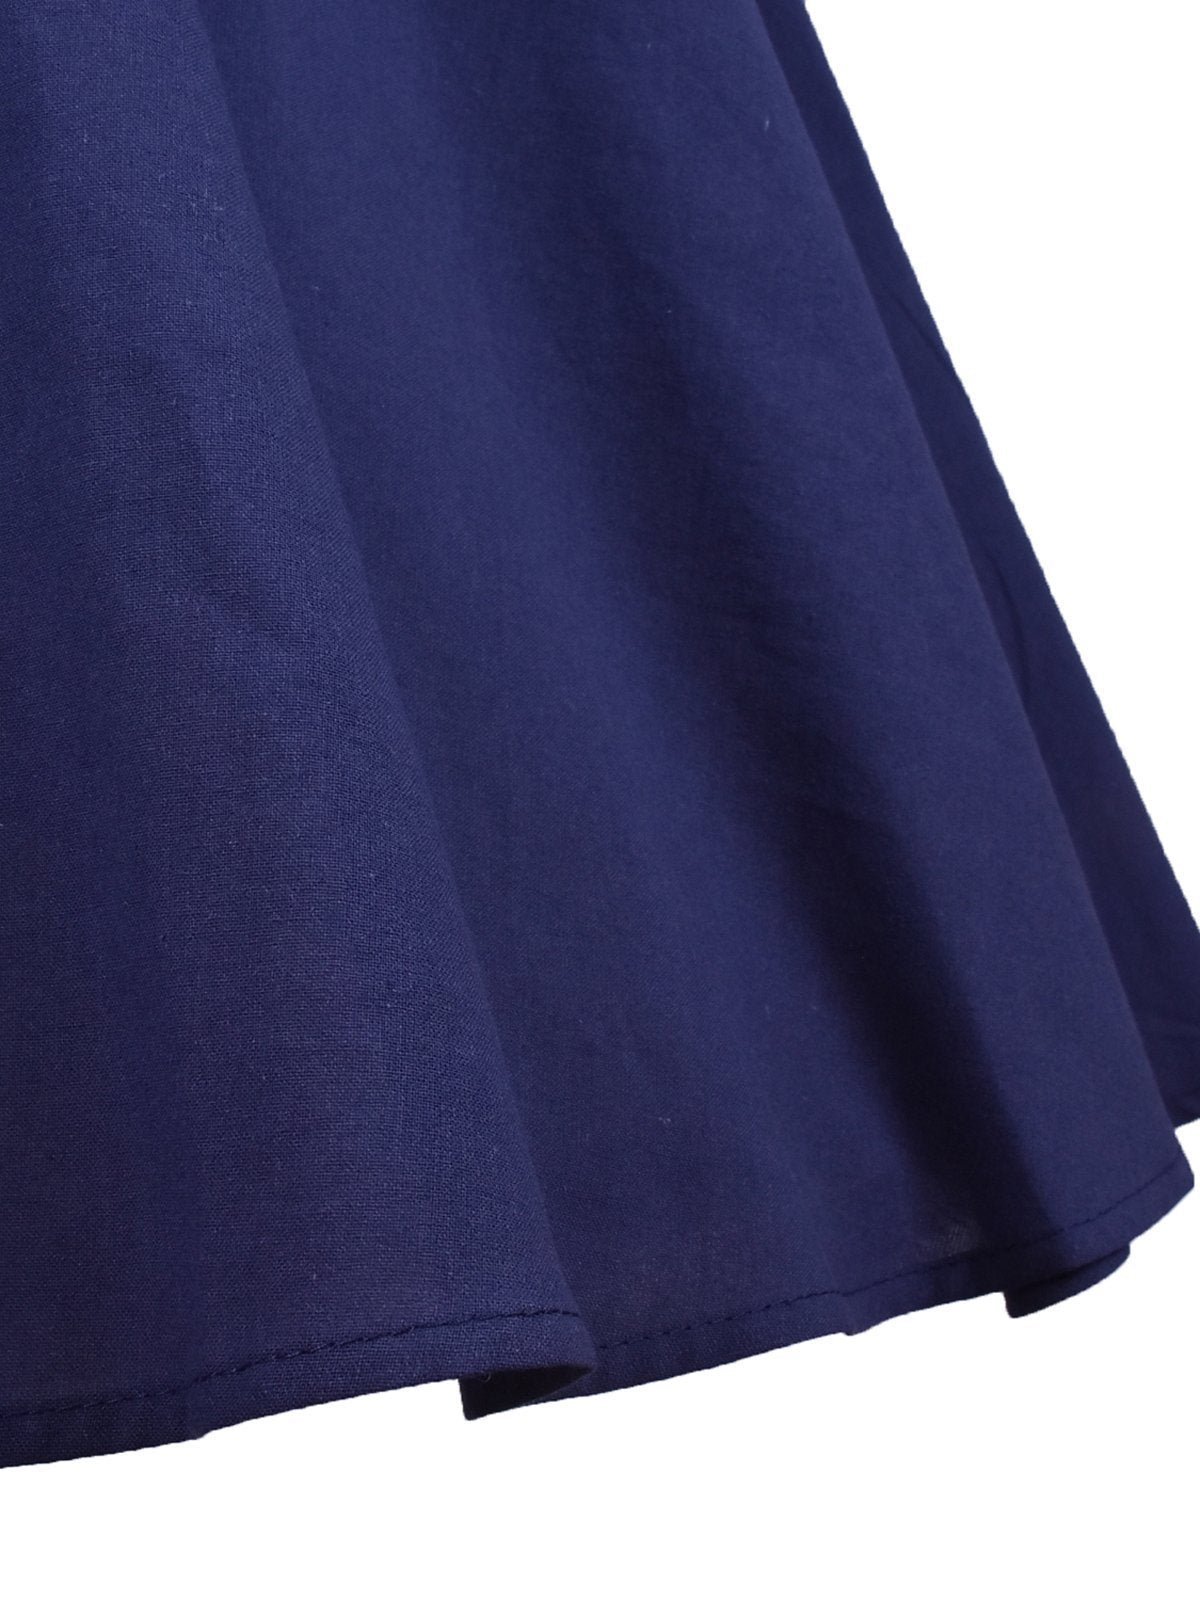 Navy Blue 1950s 3/4 Sleeve Swing Dress